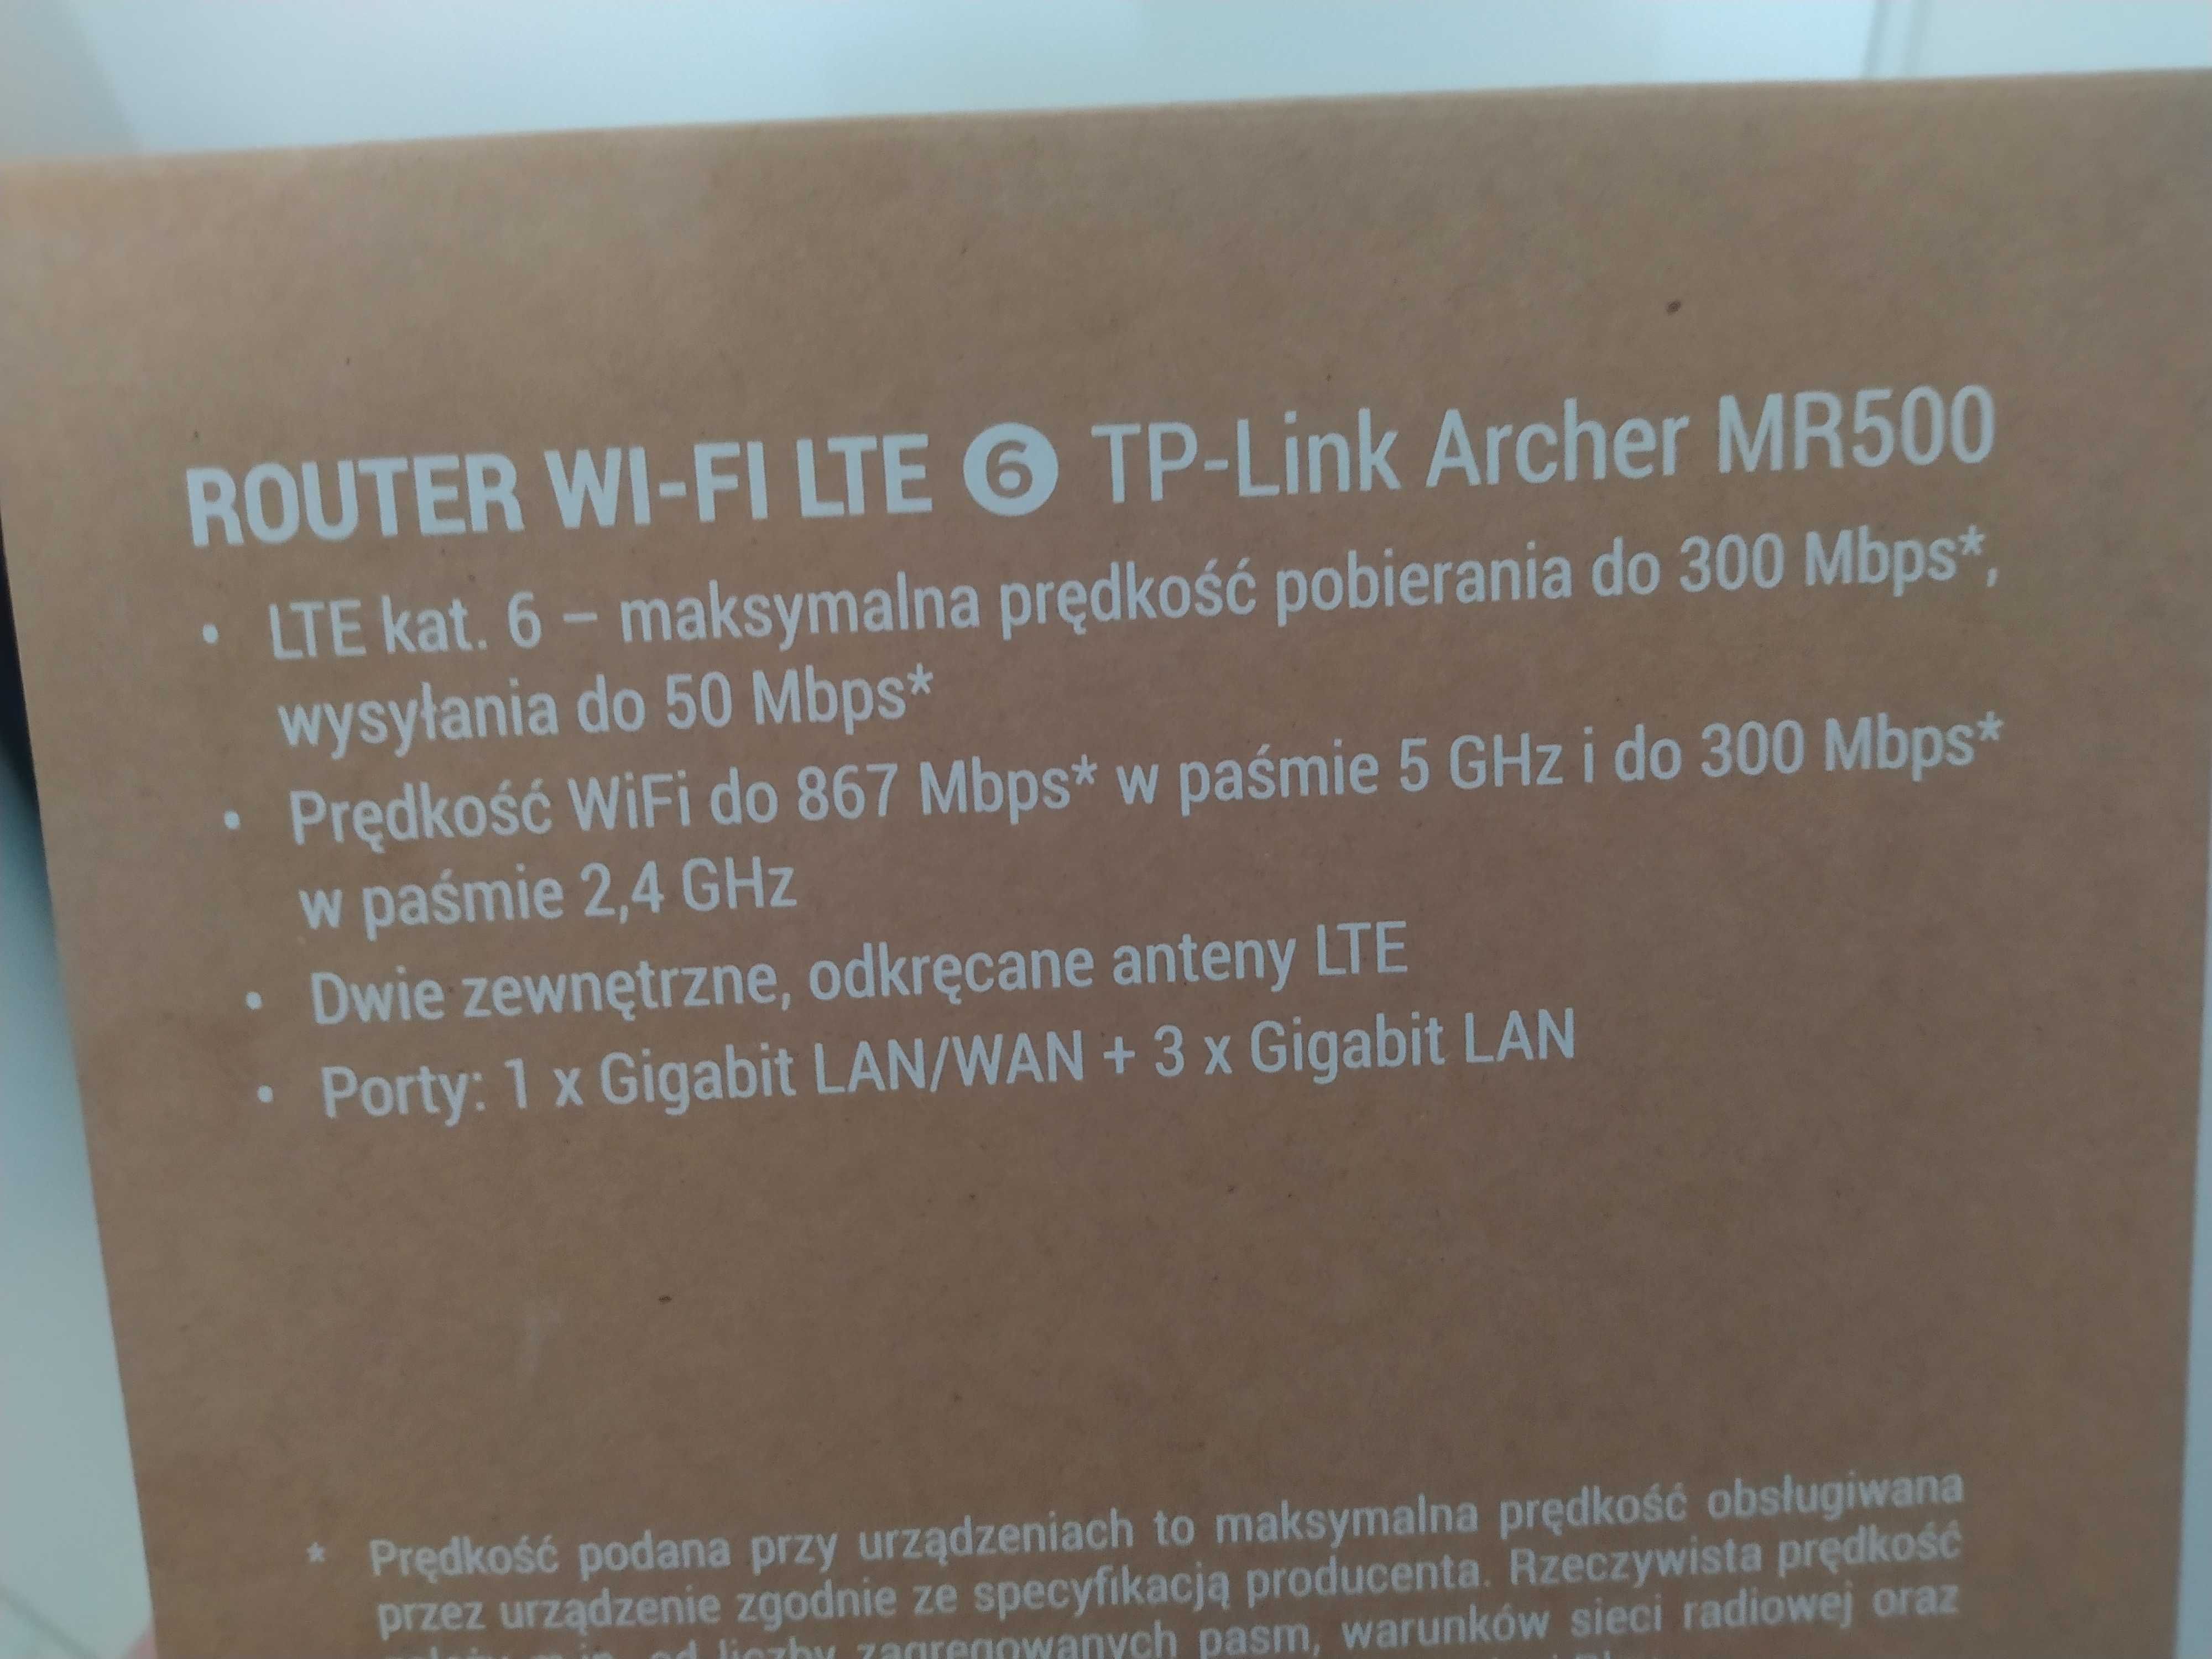 Router stacjonarny kat. 6 TP-Link Archer MR500